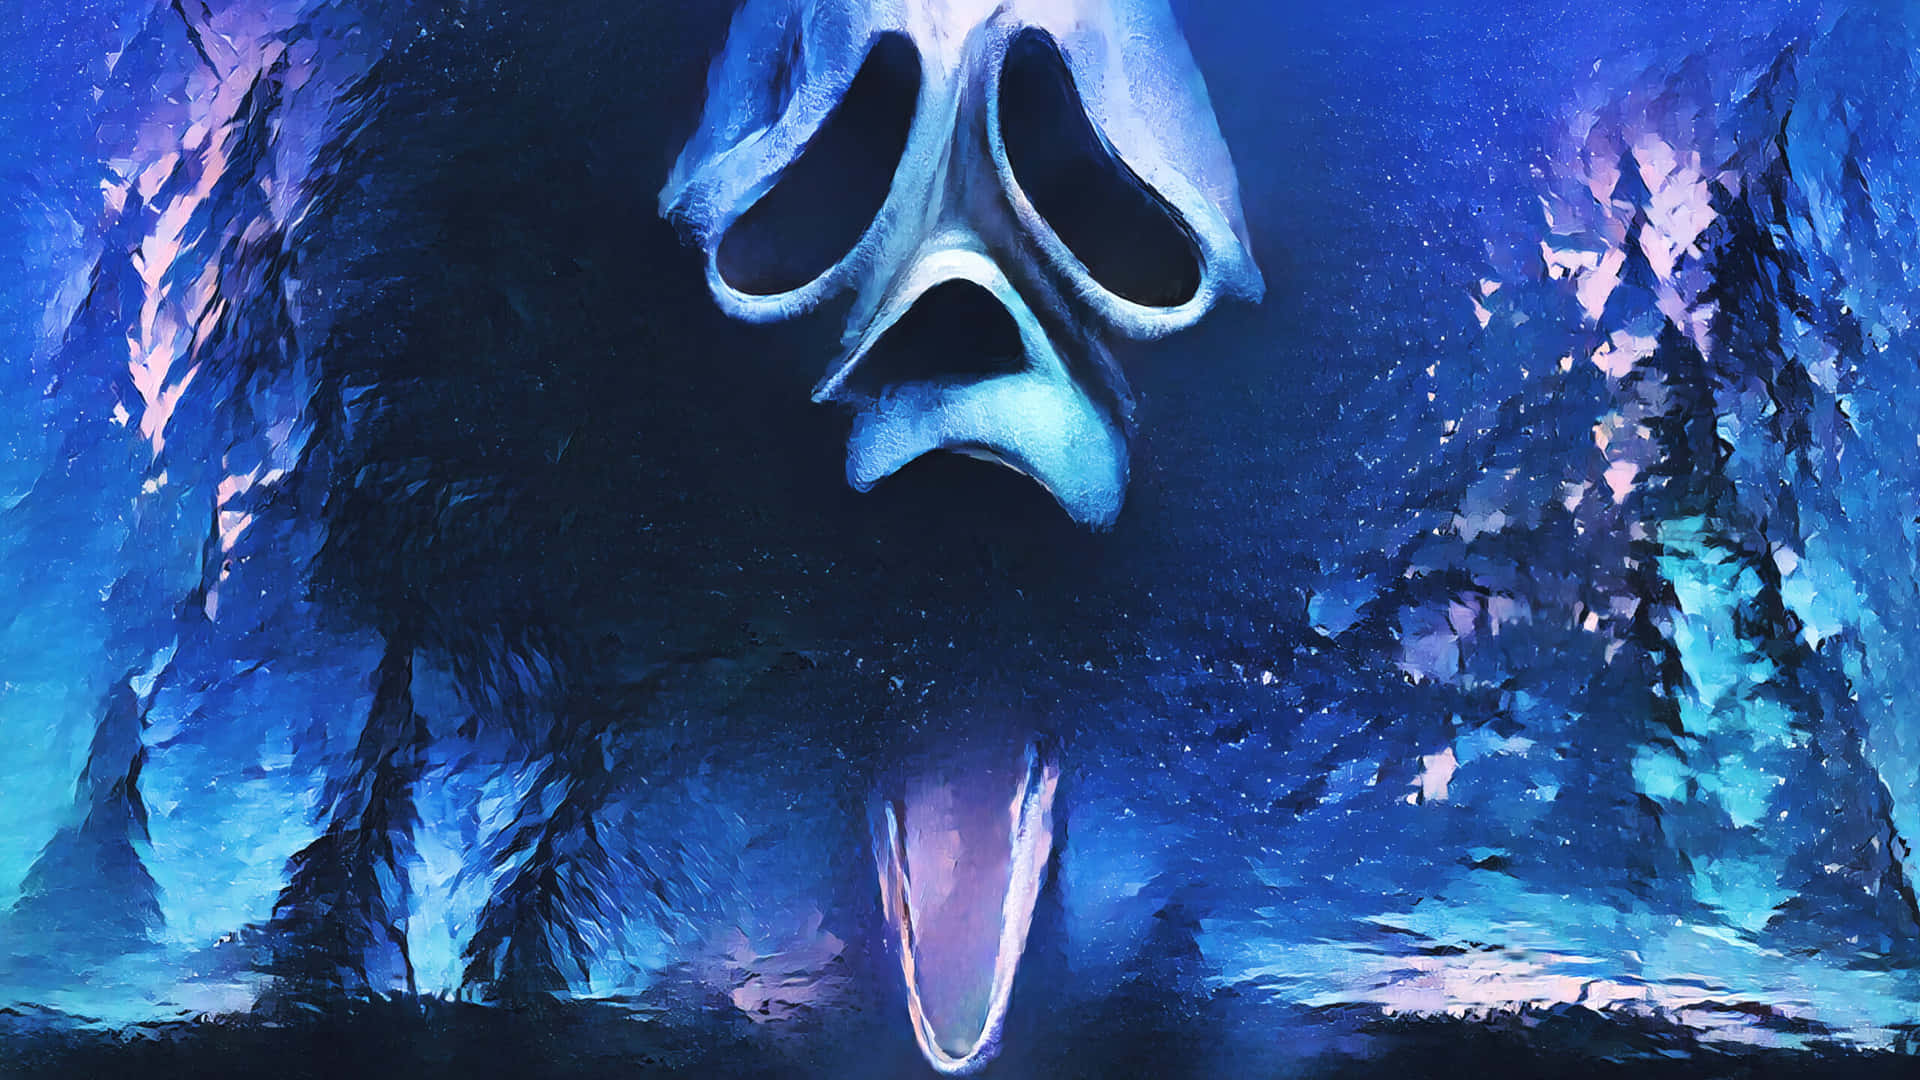 Ghostface - Get Ready To Scream